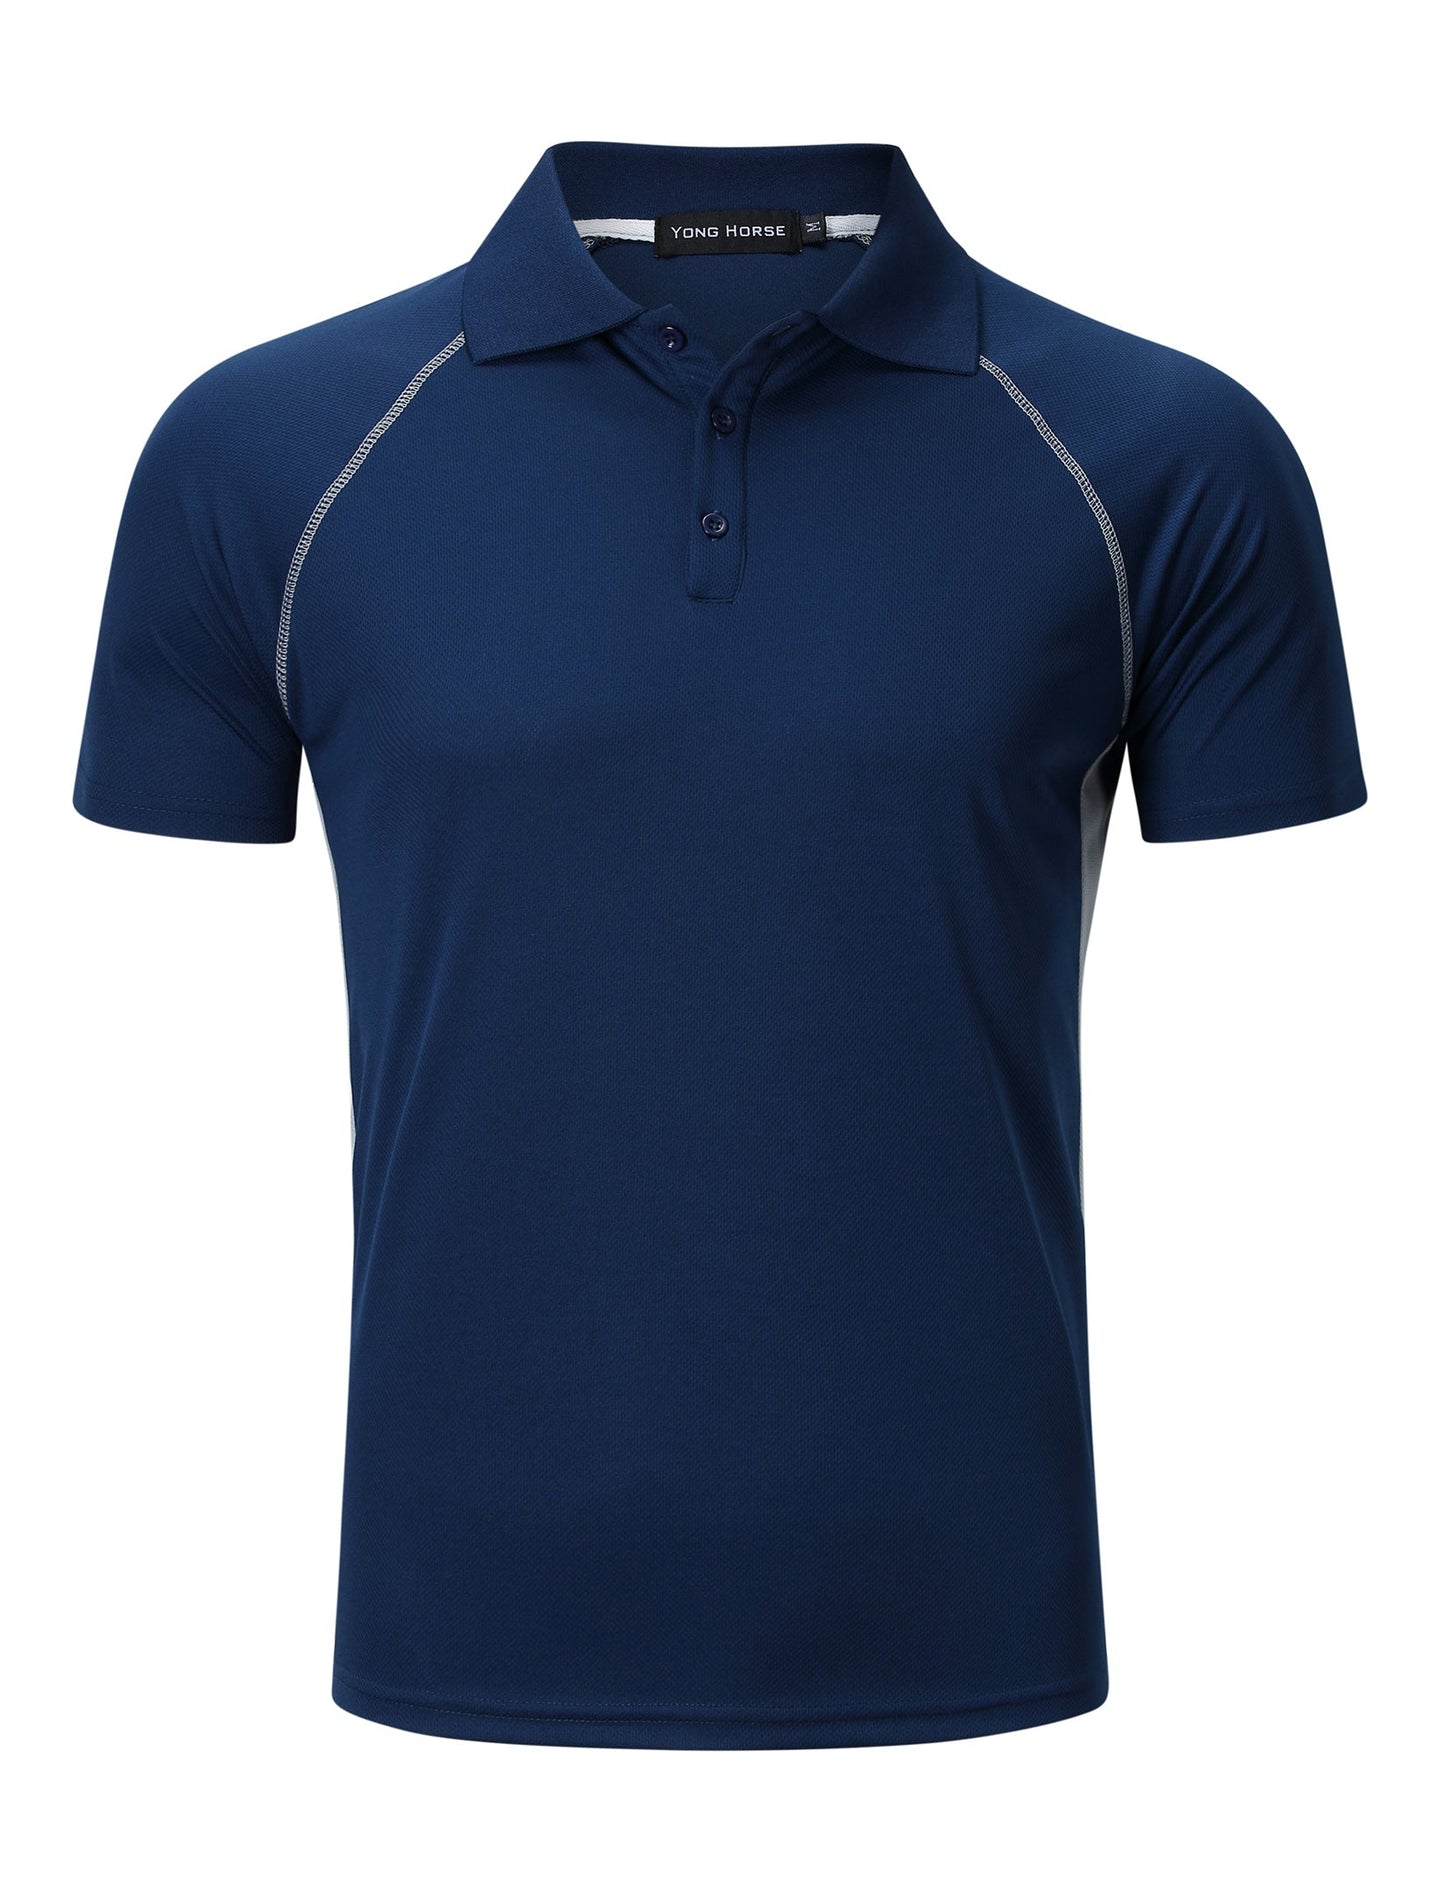 YESFASHION Men's Golf Polo Shirts Short Sleeve Collared T Shirt Black